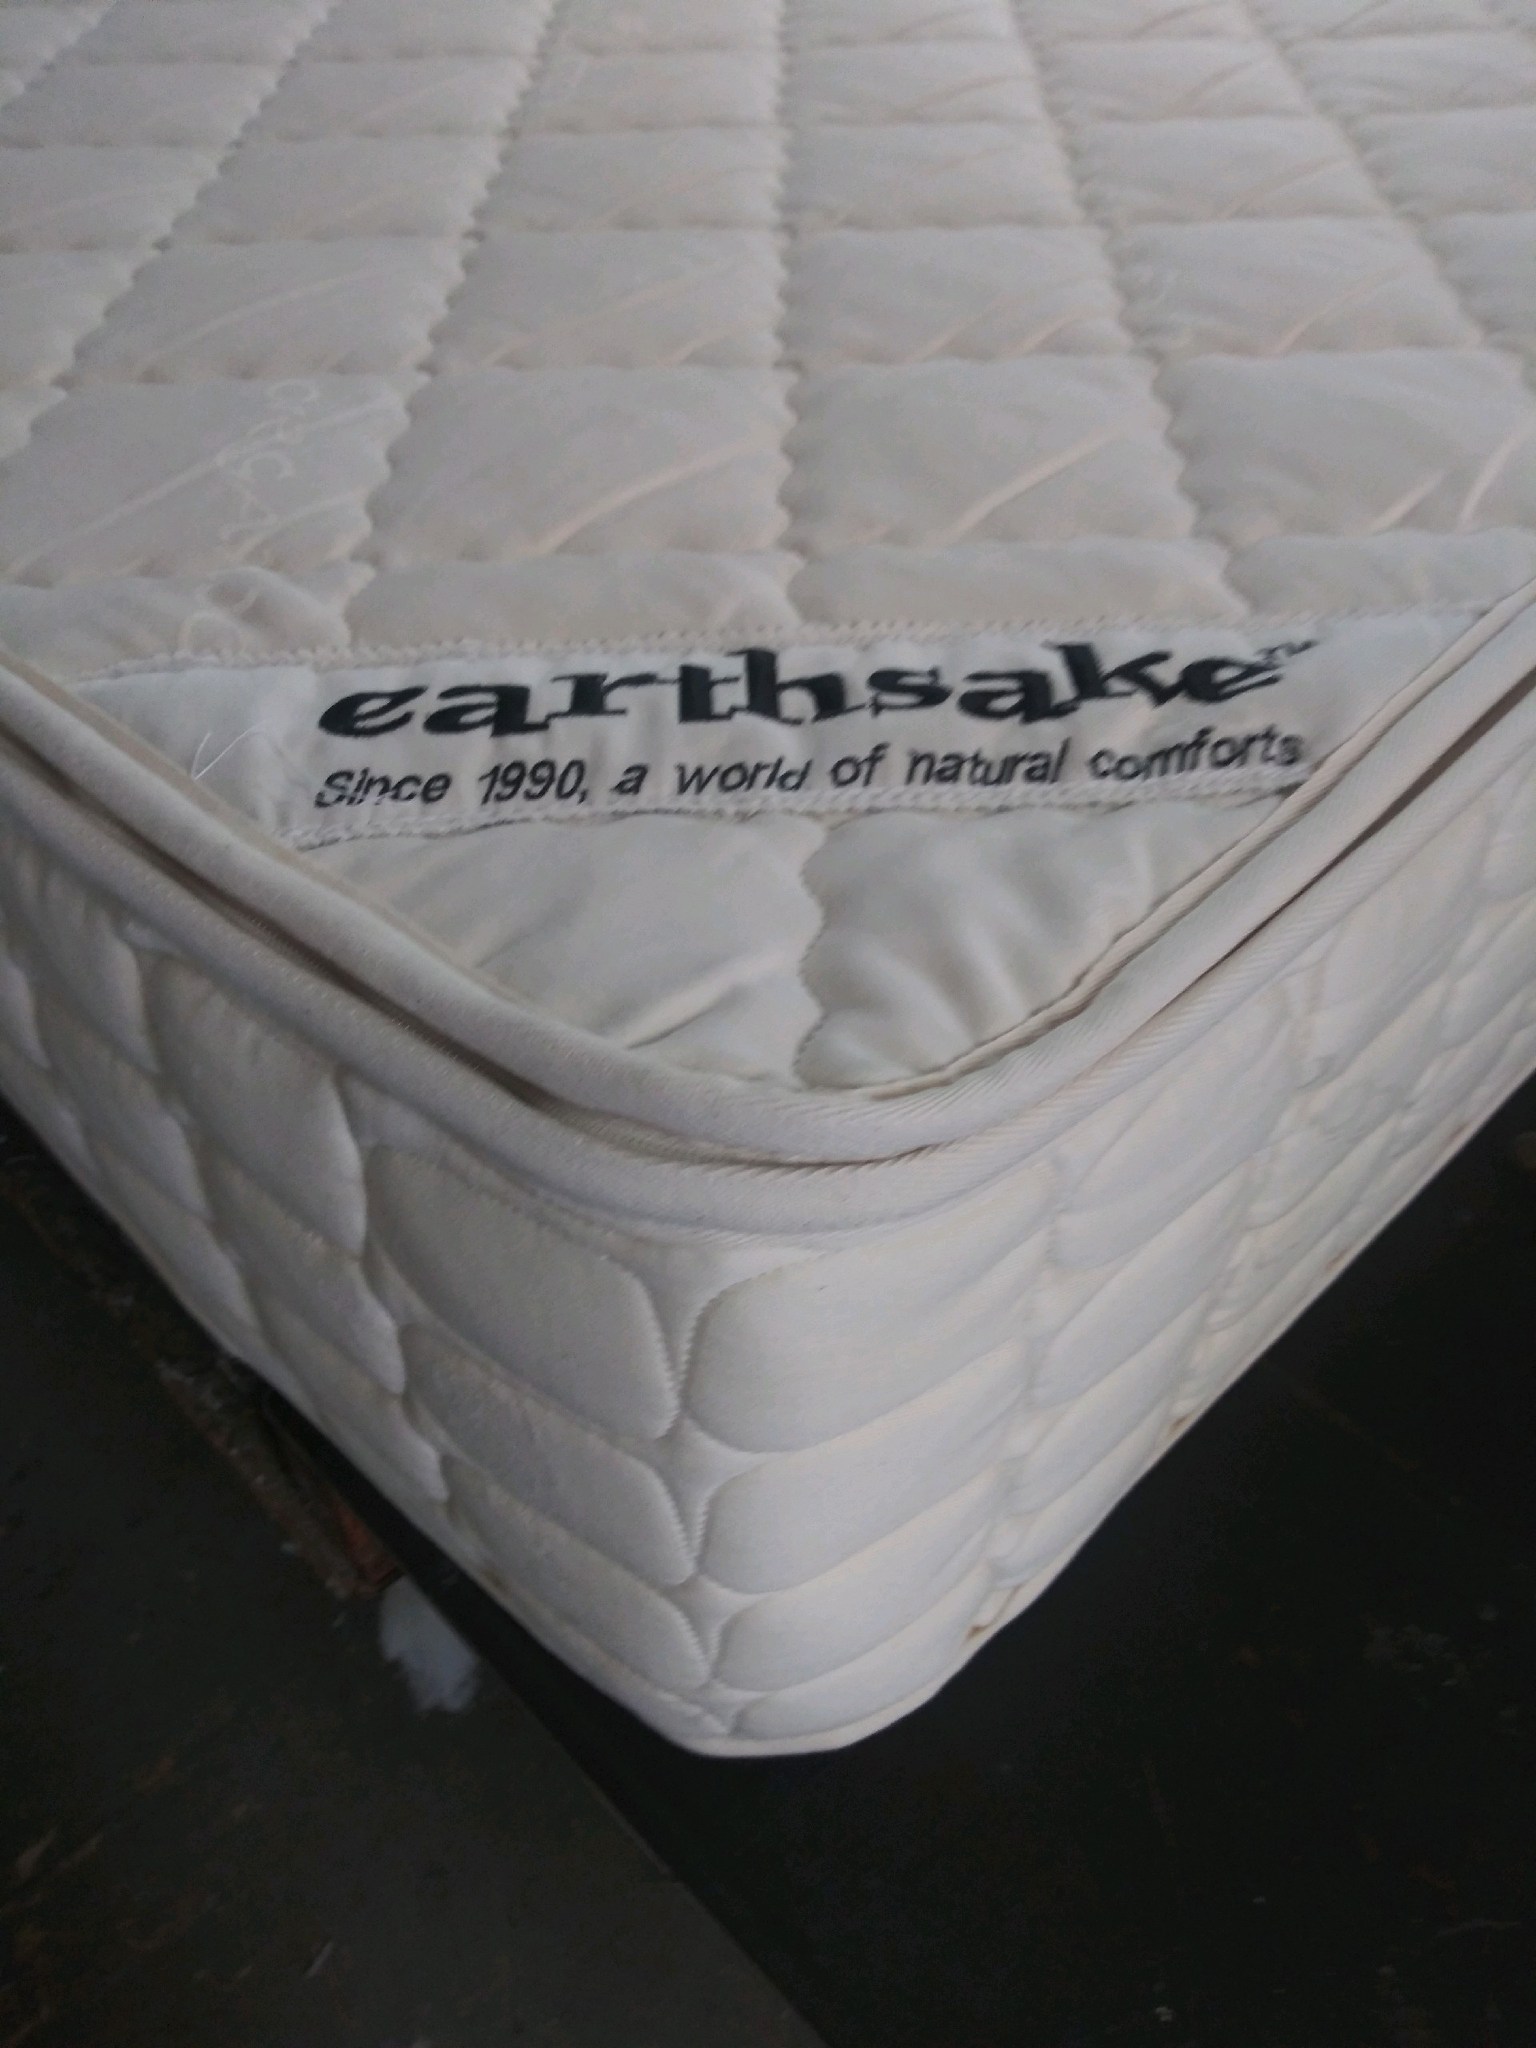 Earthsake pure hemp mattress